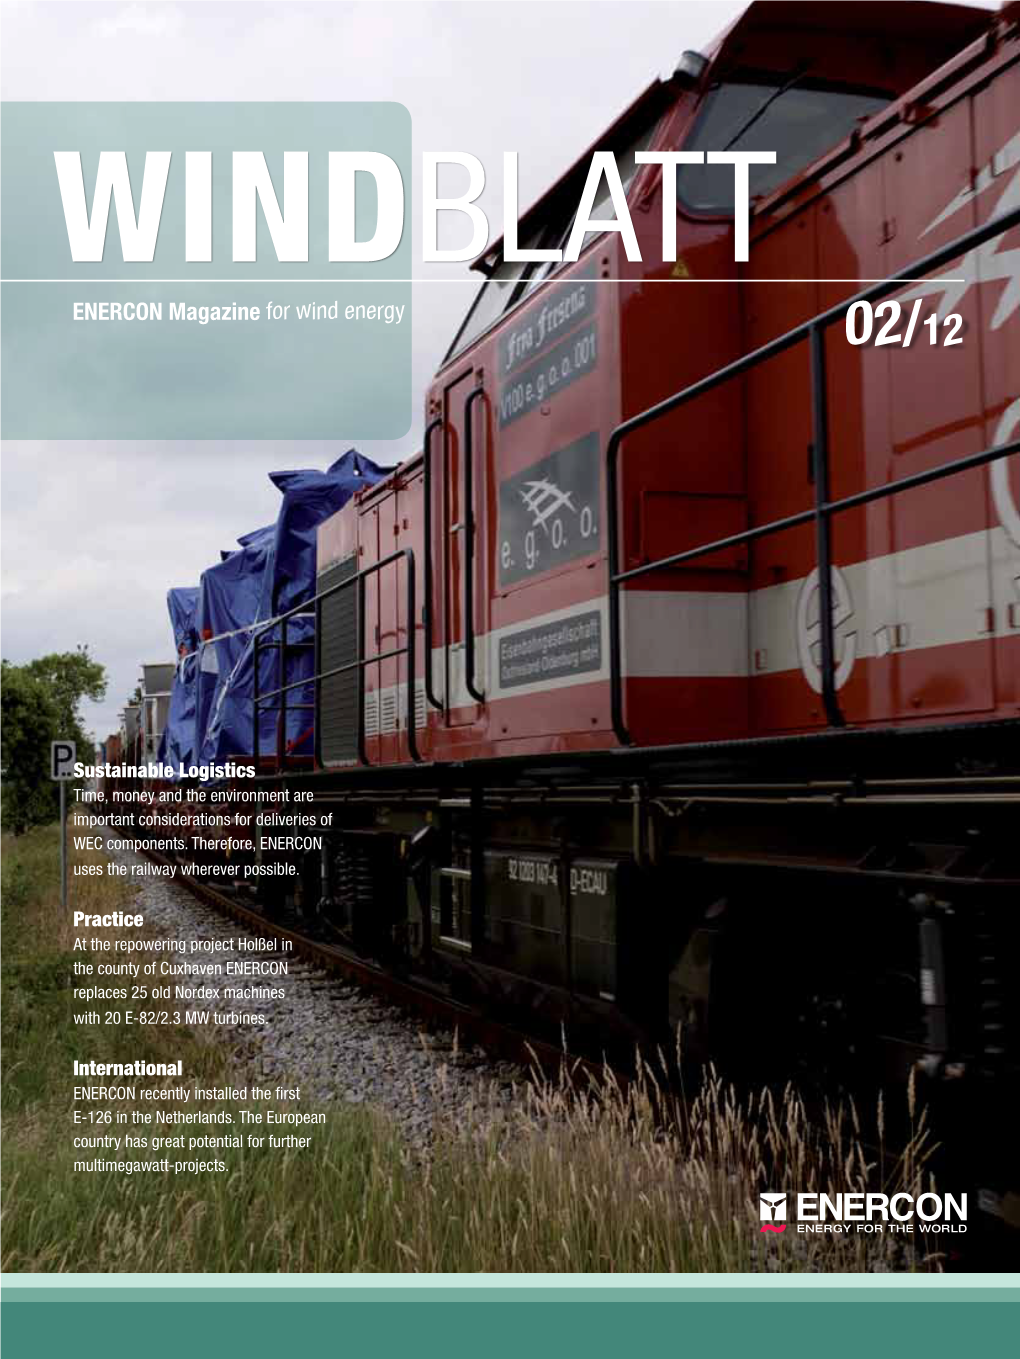 ENERCON Magazine for Wind Energy 02/12